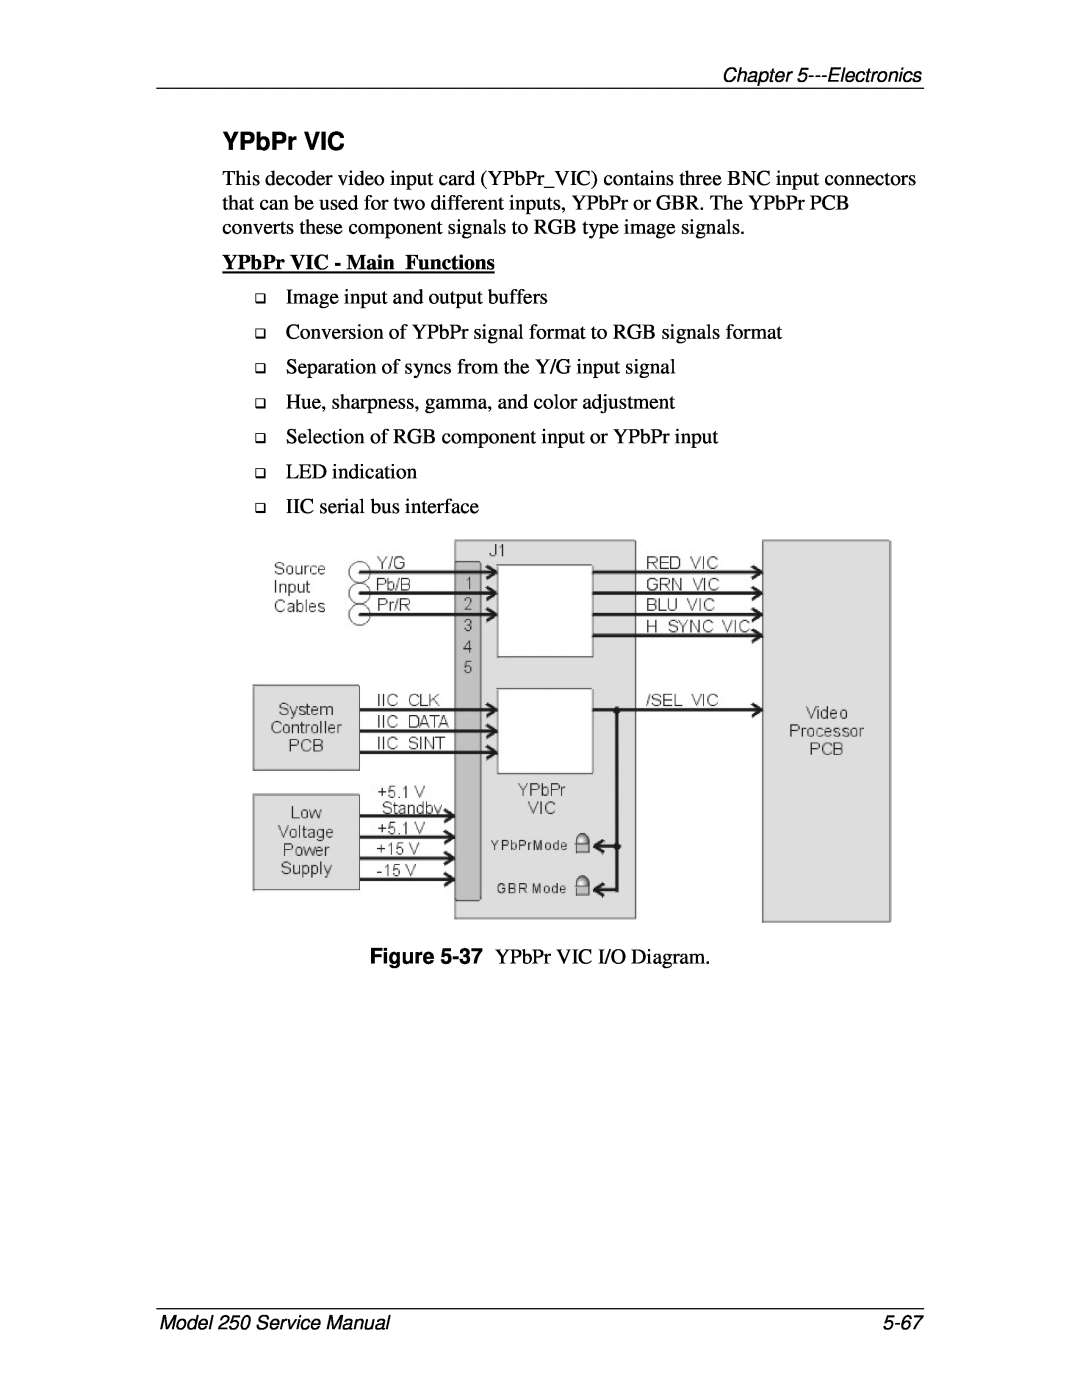 JVC 250 service manual YPbPr VIC - Main Functions 